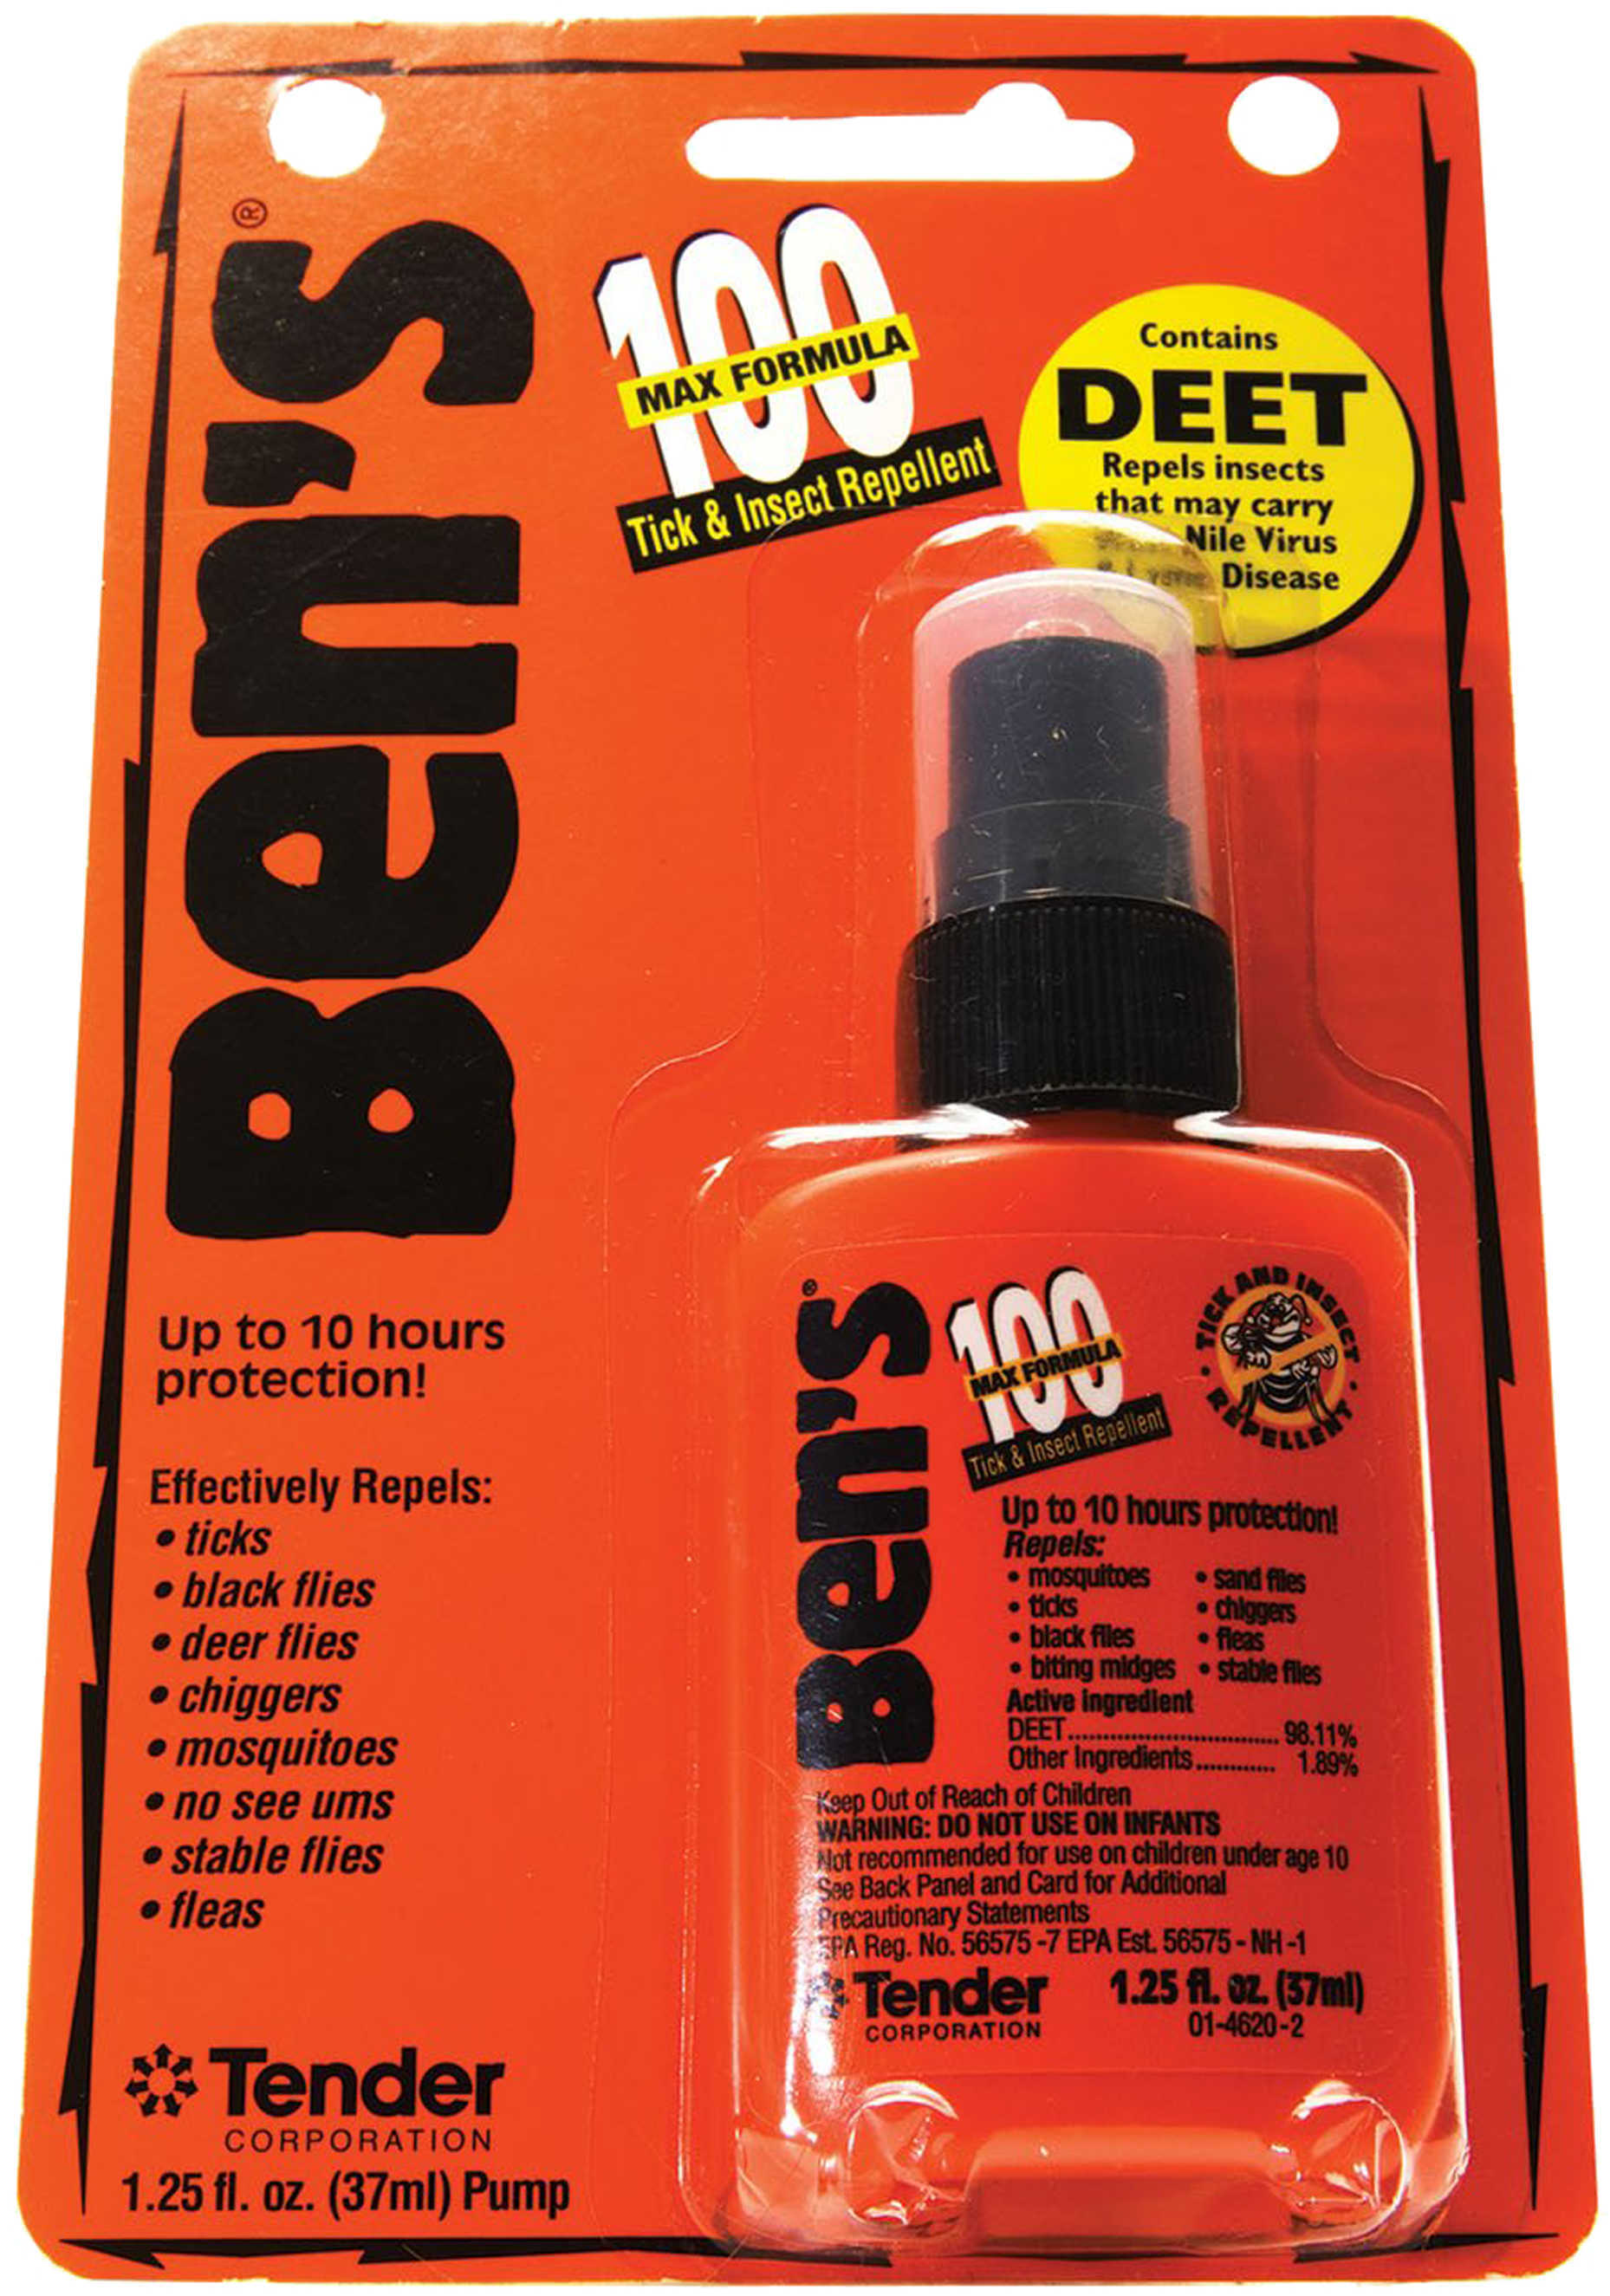 Bens / Tender Corp Adventure Medical KITS 100 Max Tick/Insect Repellent 1.25oz Orange 00067070